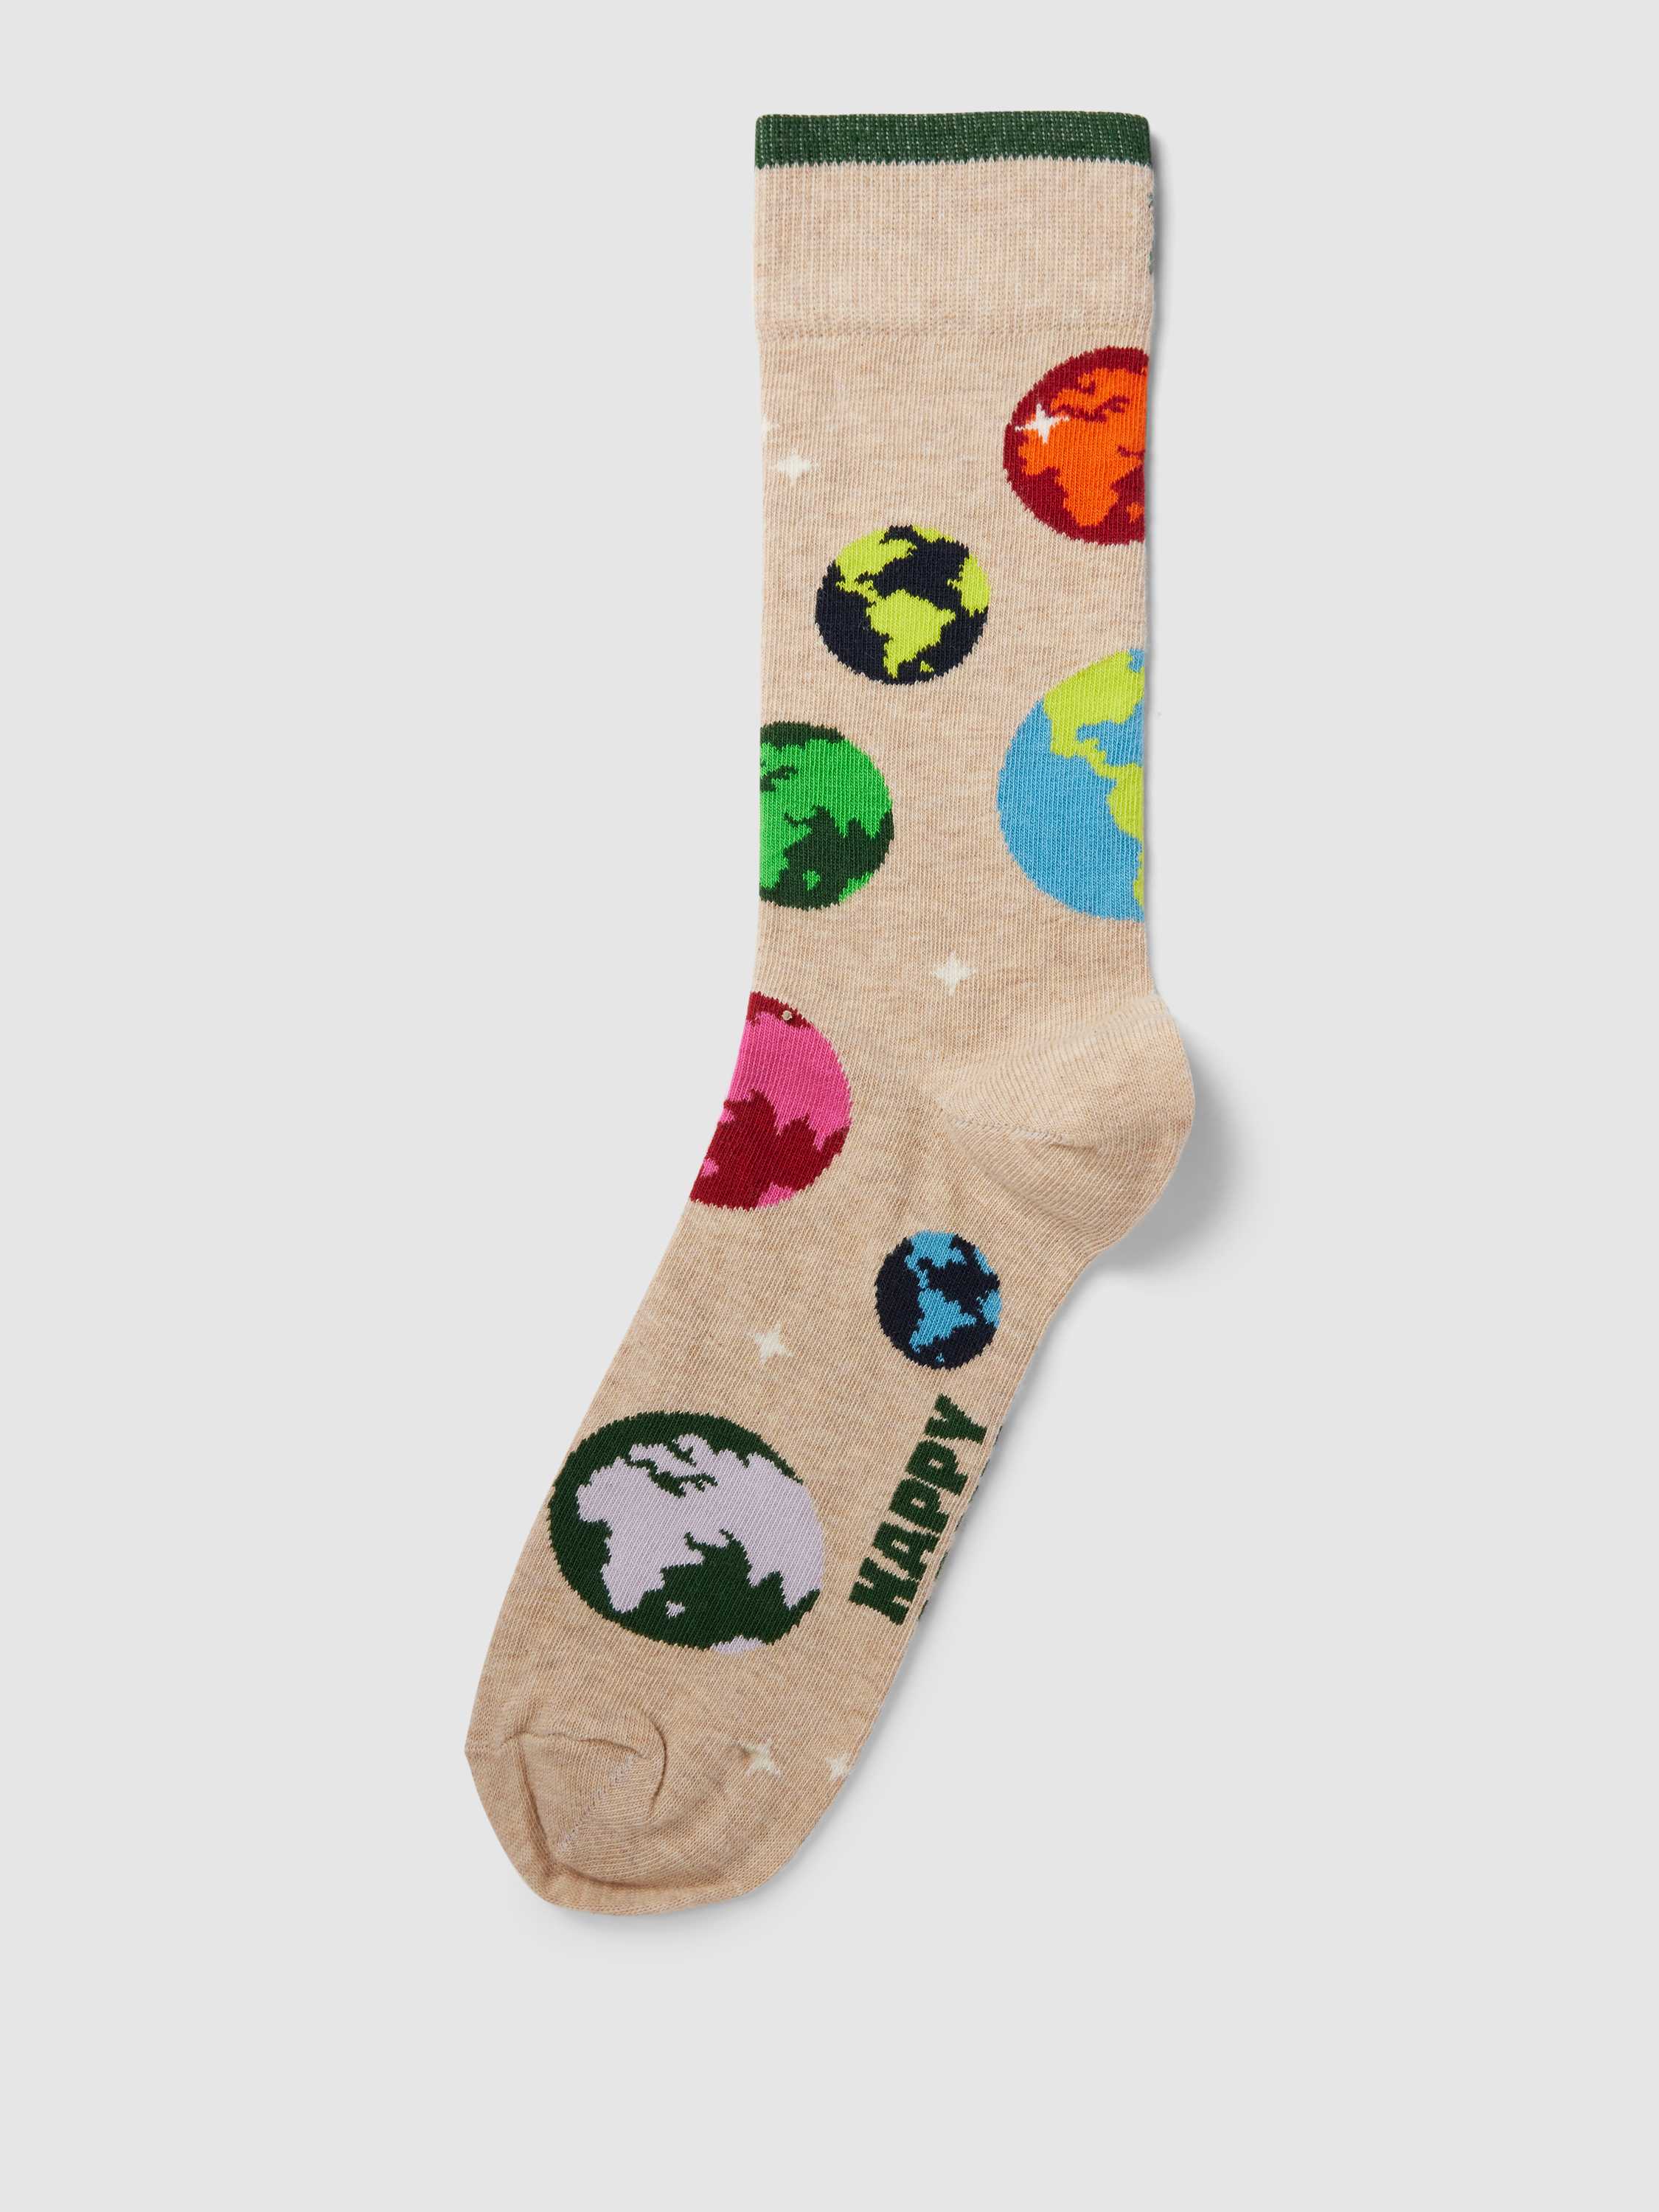 Socken mit Motiv-Print Modell 'Planet Earth', Peek & Cloppenburg